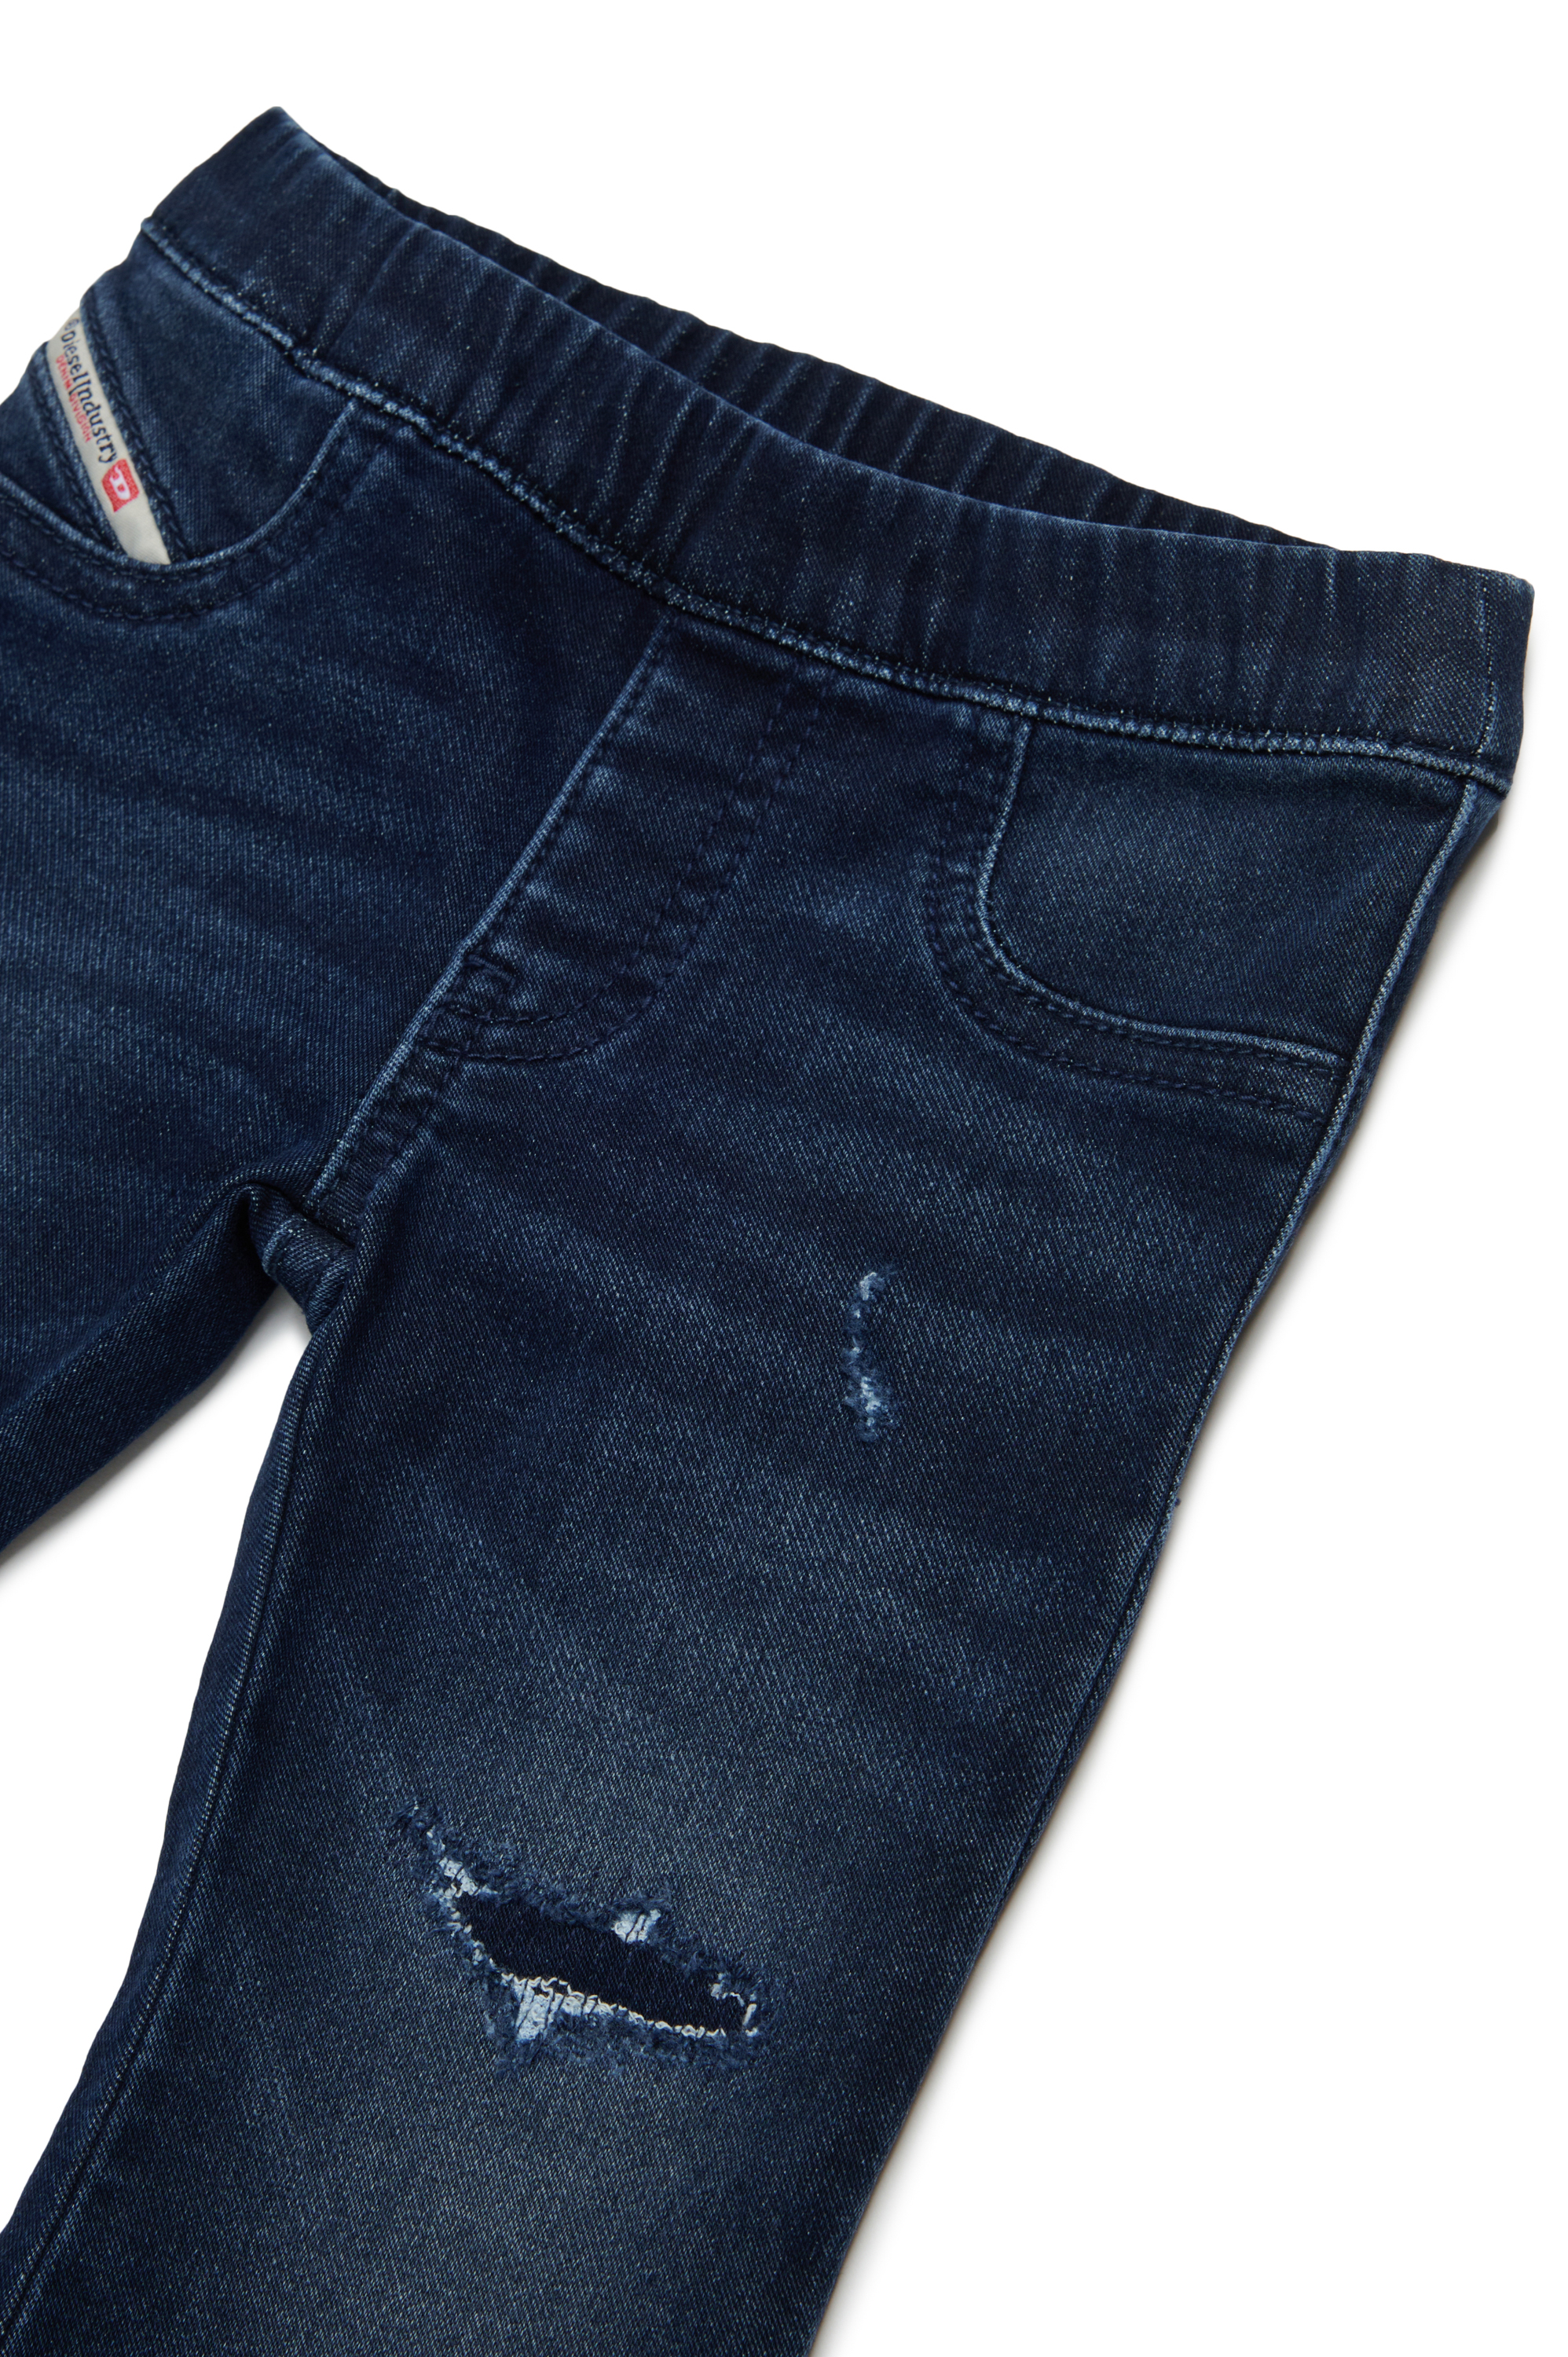 Diesel - PARIB JJJ, Female Flare Jeans - Pari in ブルー - Image 3